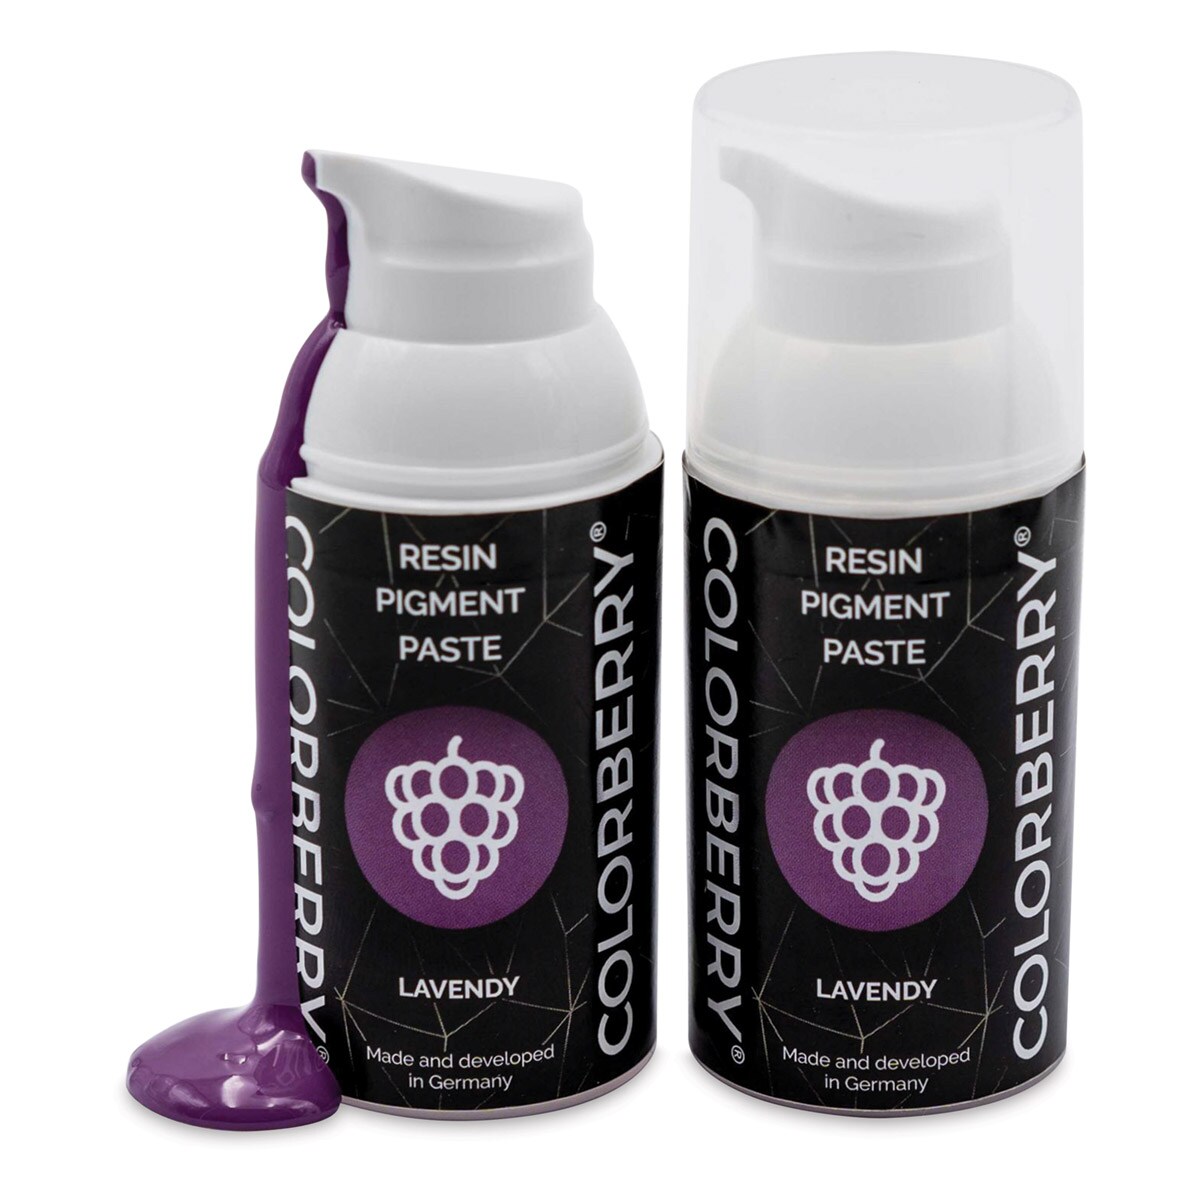 Colorberry Resin Pigment Paste - Lavendy, 30 ml, Bottle